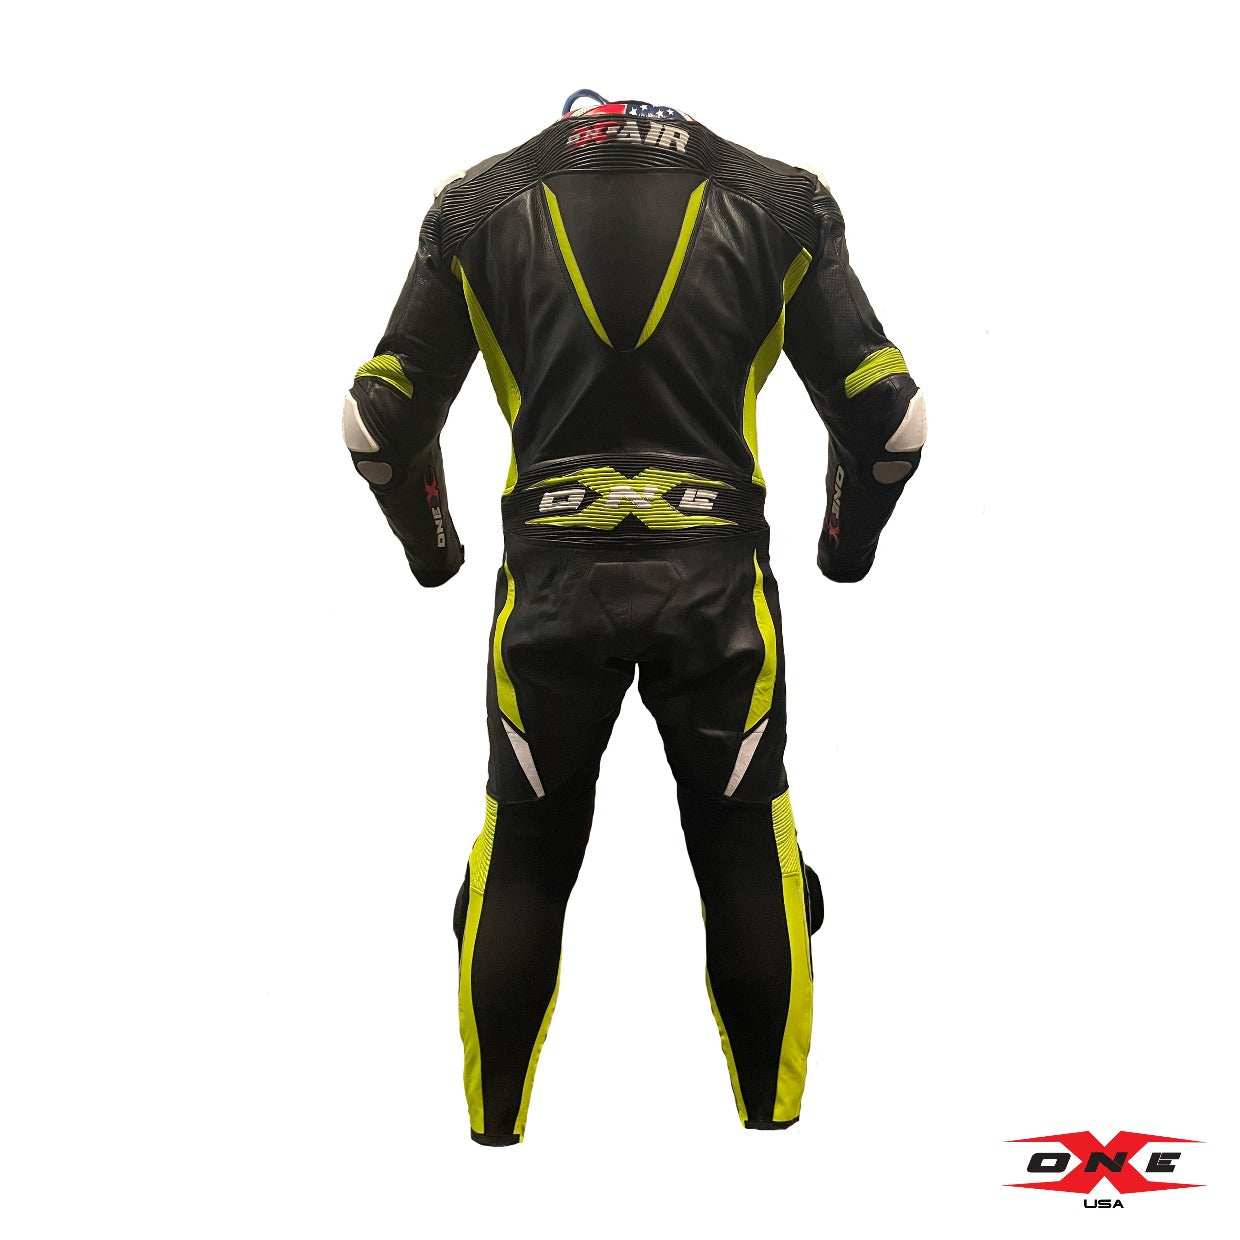 OneX USA XR22 Airbag Ready Pro Race Suit - Black/Fluor Yellow